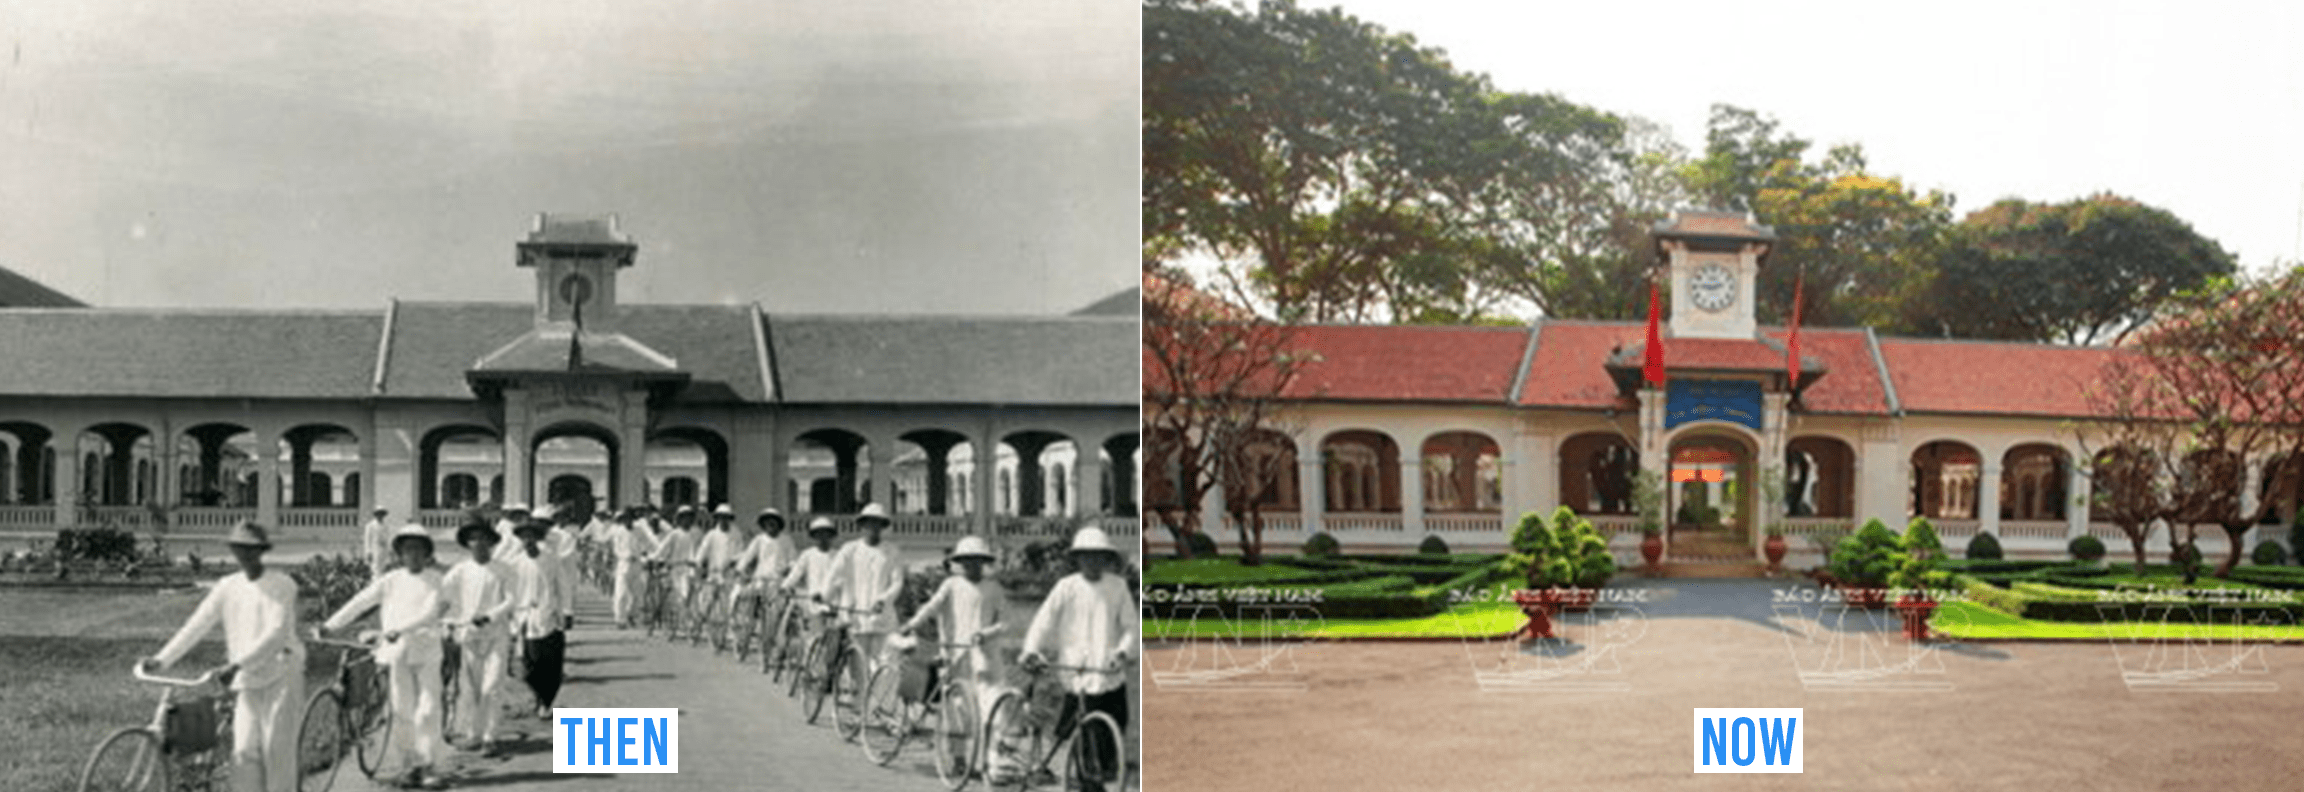 Saigon then and now_petrus ky